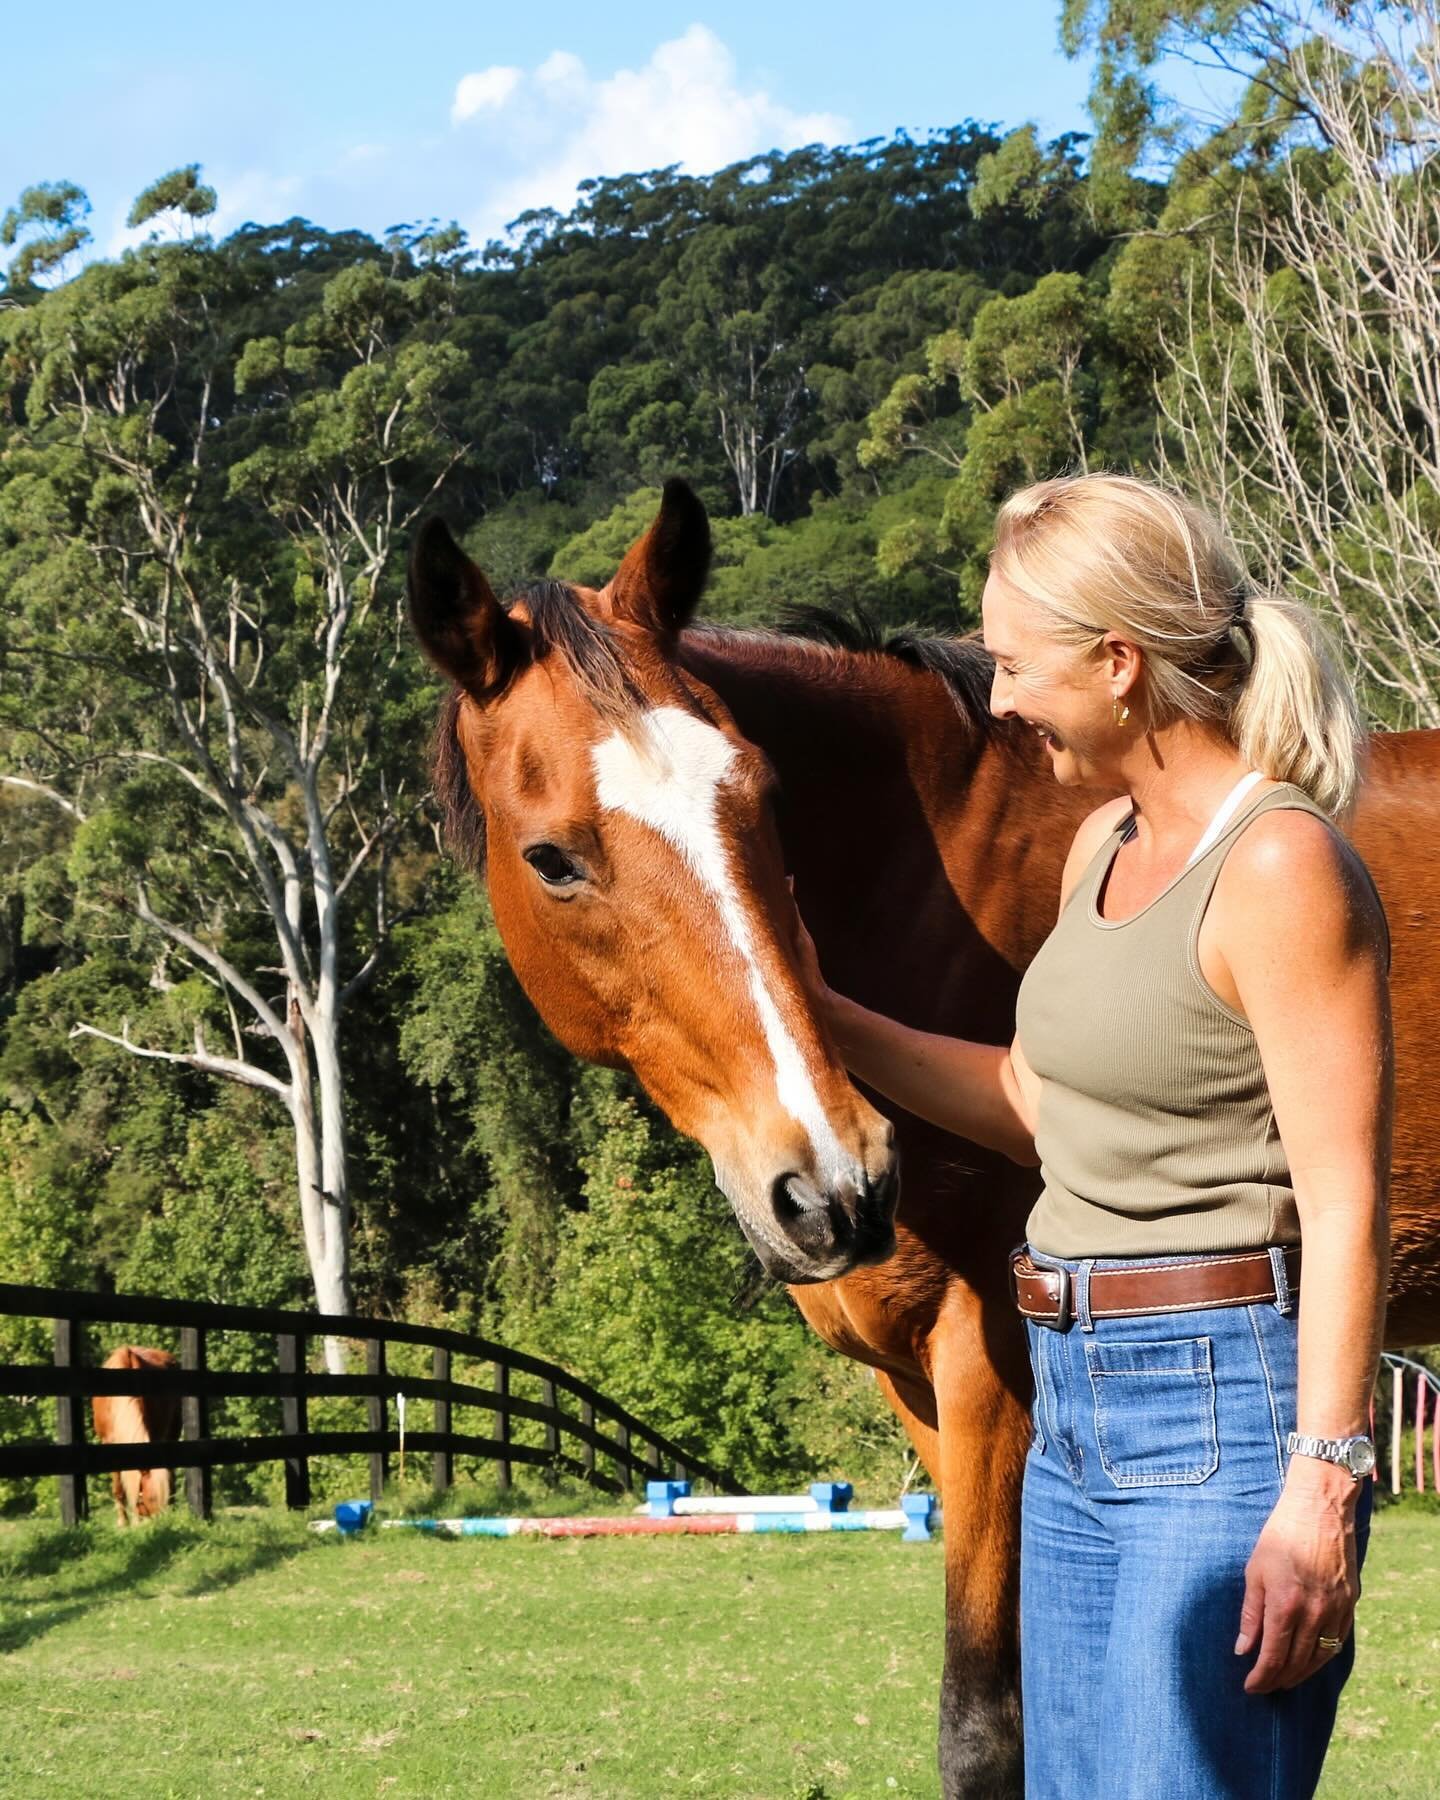 Paddock pals 🍃🌿🍂
.
.
.
.
.
.
.
#centralcoast #centralcoastnsw  #horses  #lovecentralcoast #whatsonsydney #tourismnsw #terrigal #horseriding #ExploreSydney #SydneyAdventures #Ilovesydney #lovensw #visitnsw #travelaustralia #seeaustralia #horse #avo